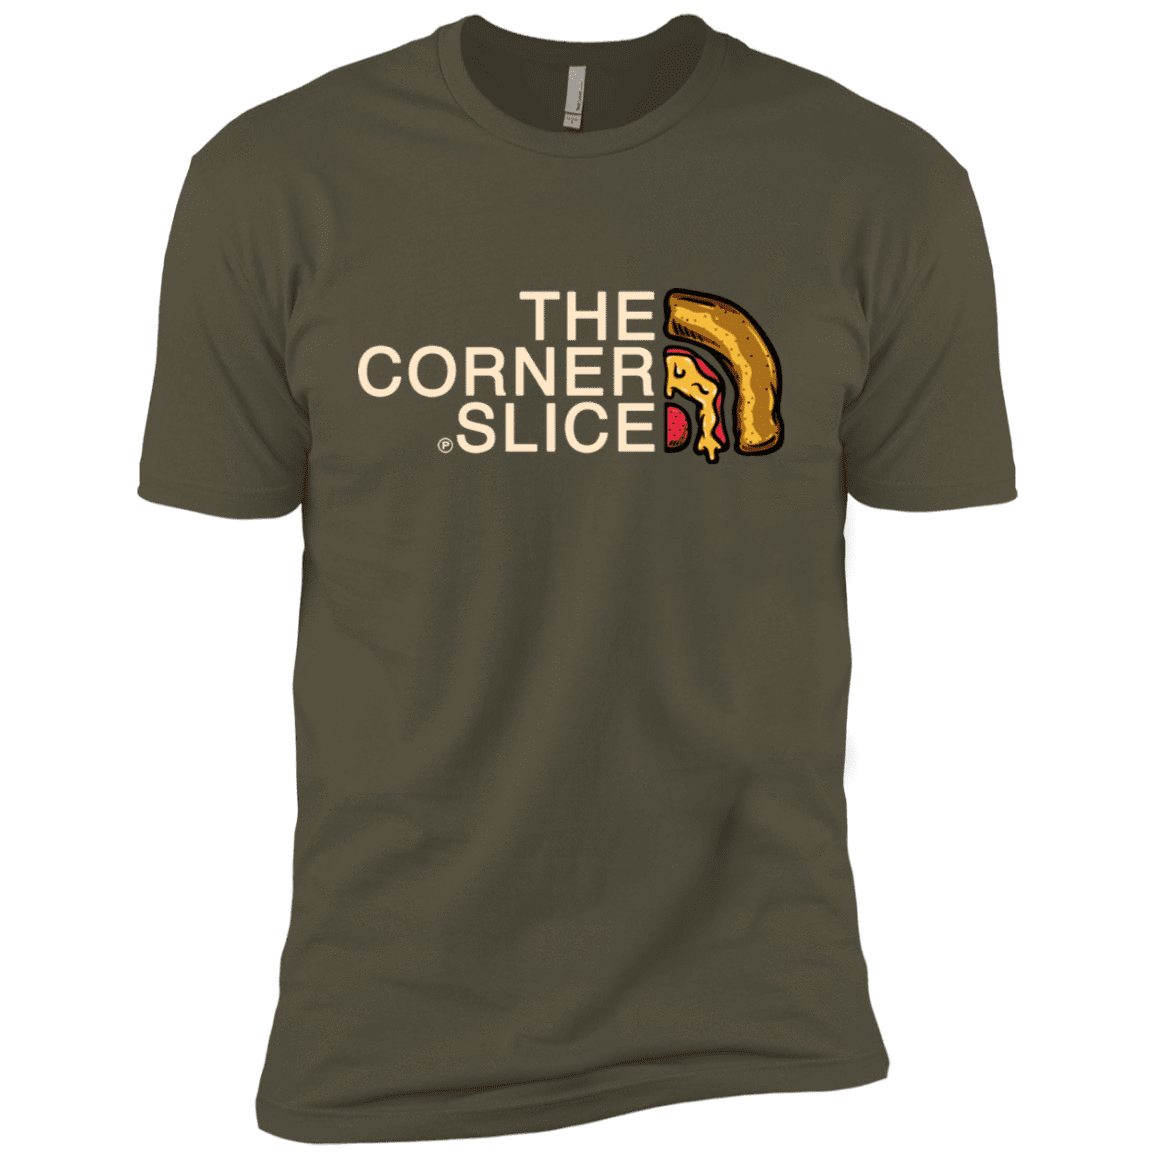 T-Shirts Military Green / X-Small The Corner Slice Men's Premium T-Shirt